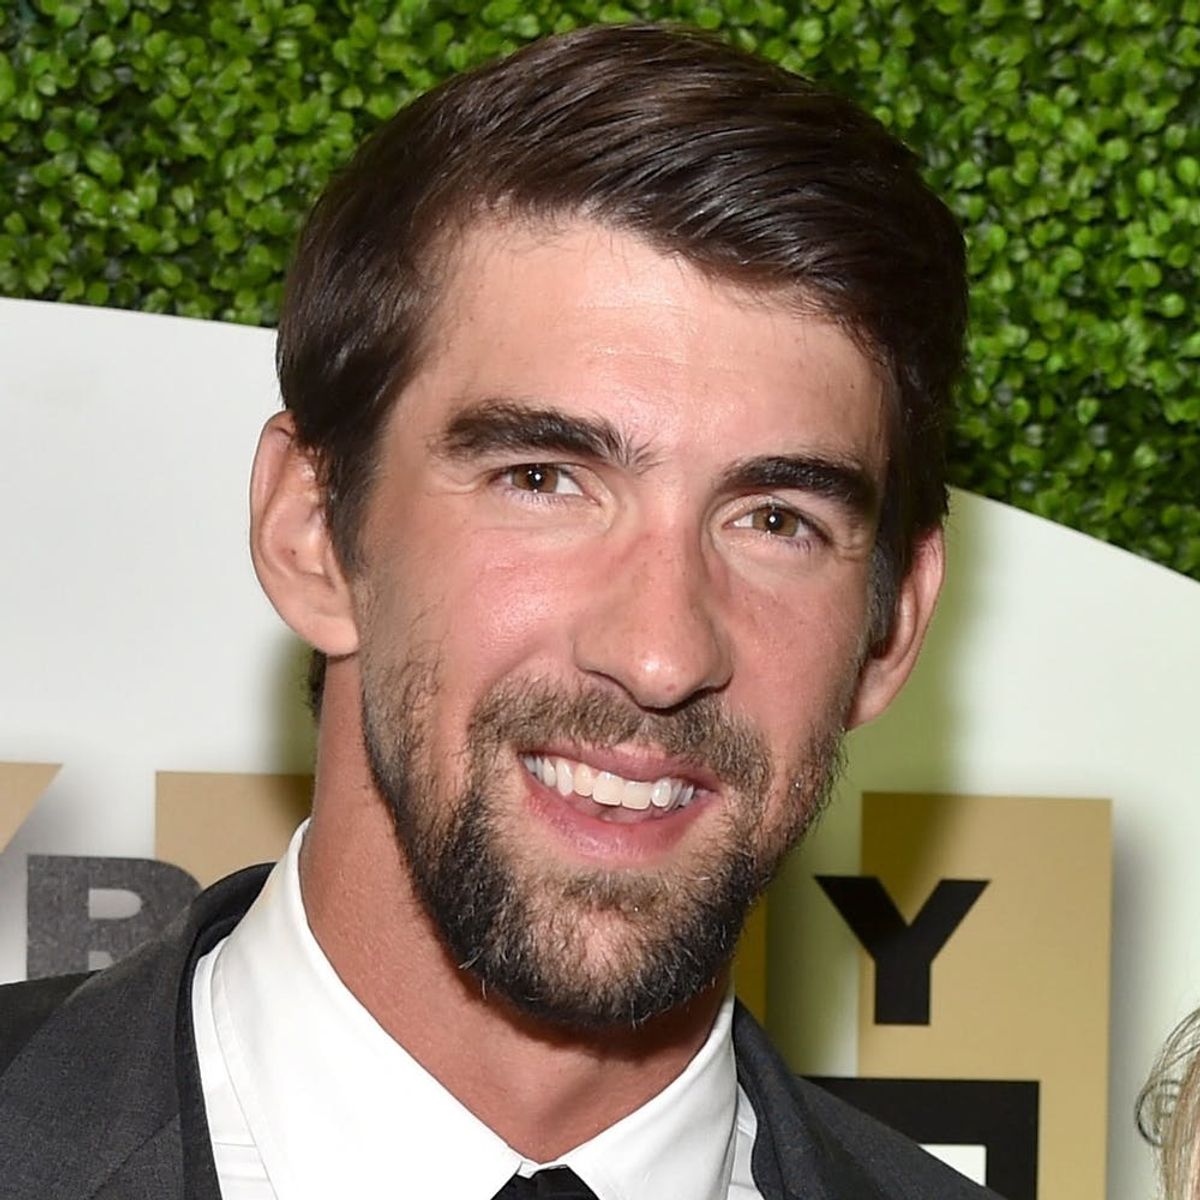 Michael Phelps Intends to Win Shark Week by Racing an Actual Shark